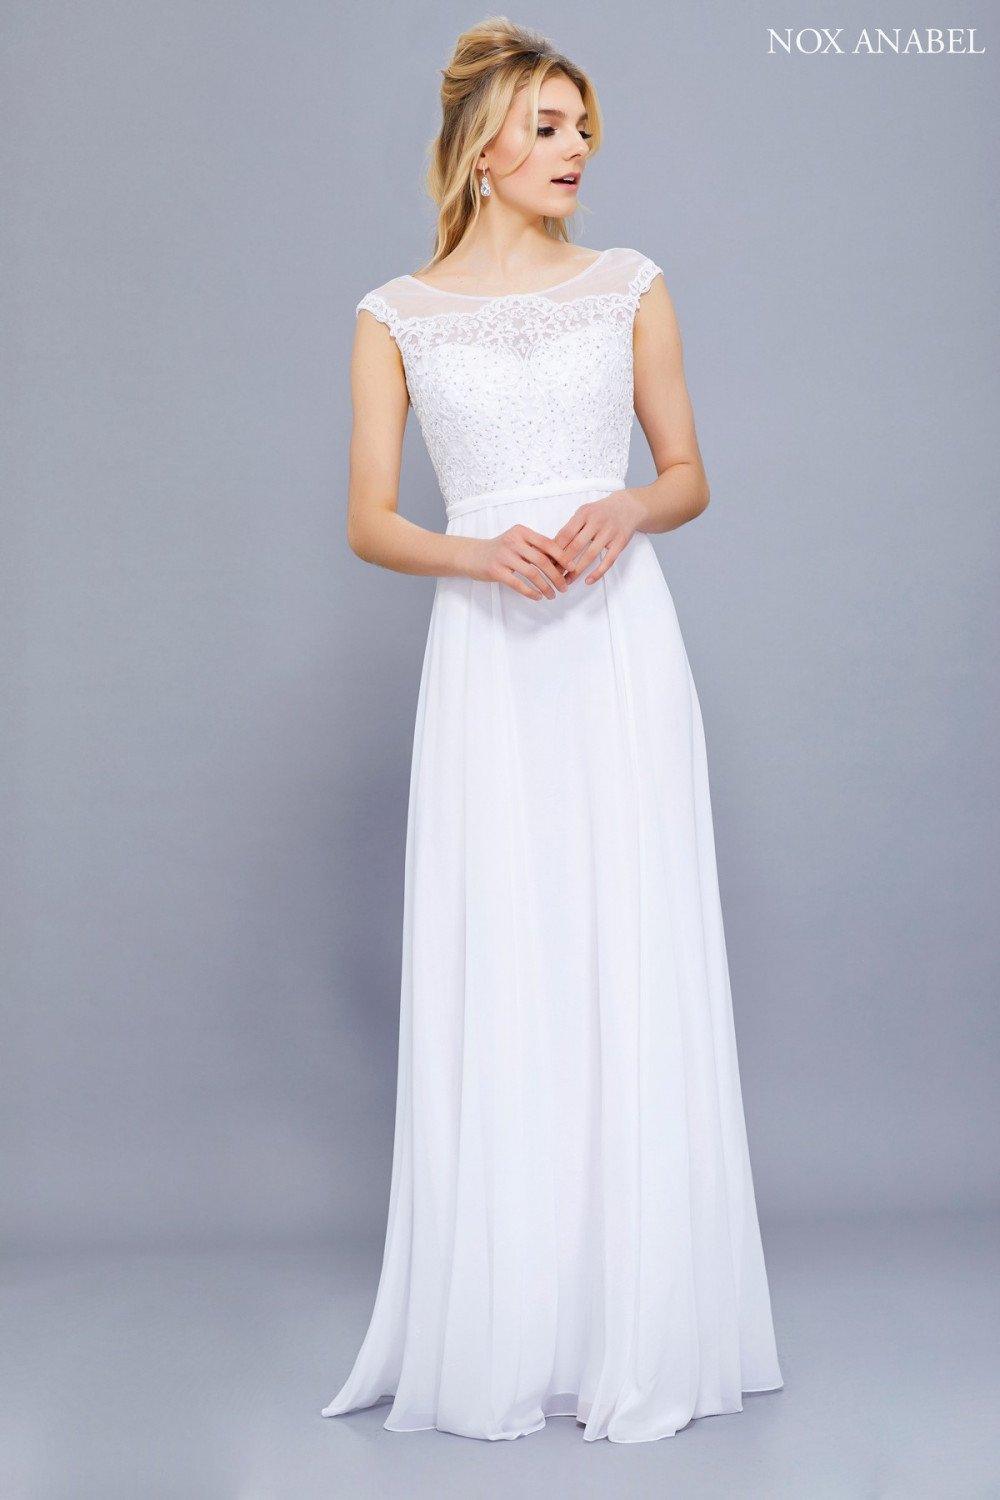 White Formal Long Dress Bridal Sale for $45.99 – The Dress Outlet